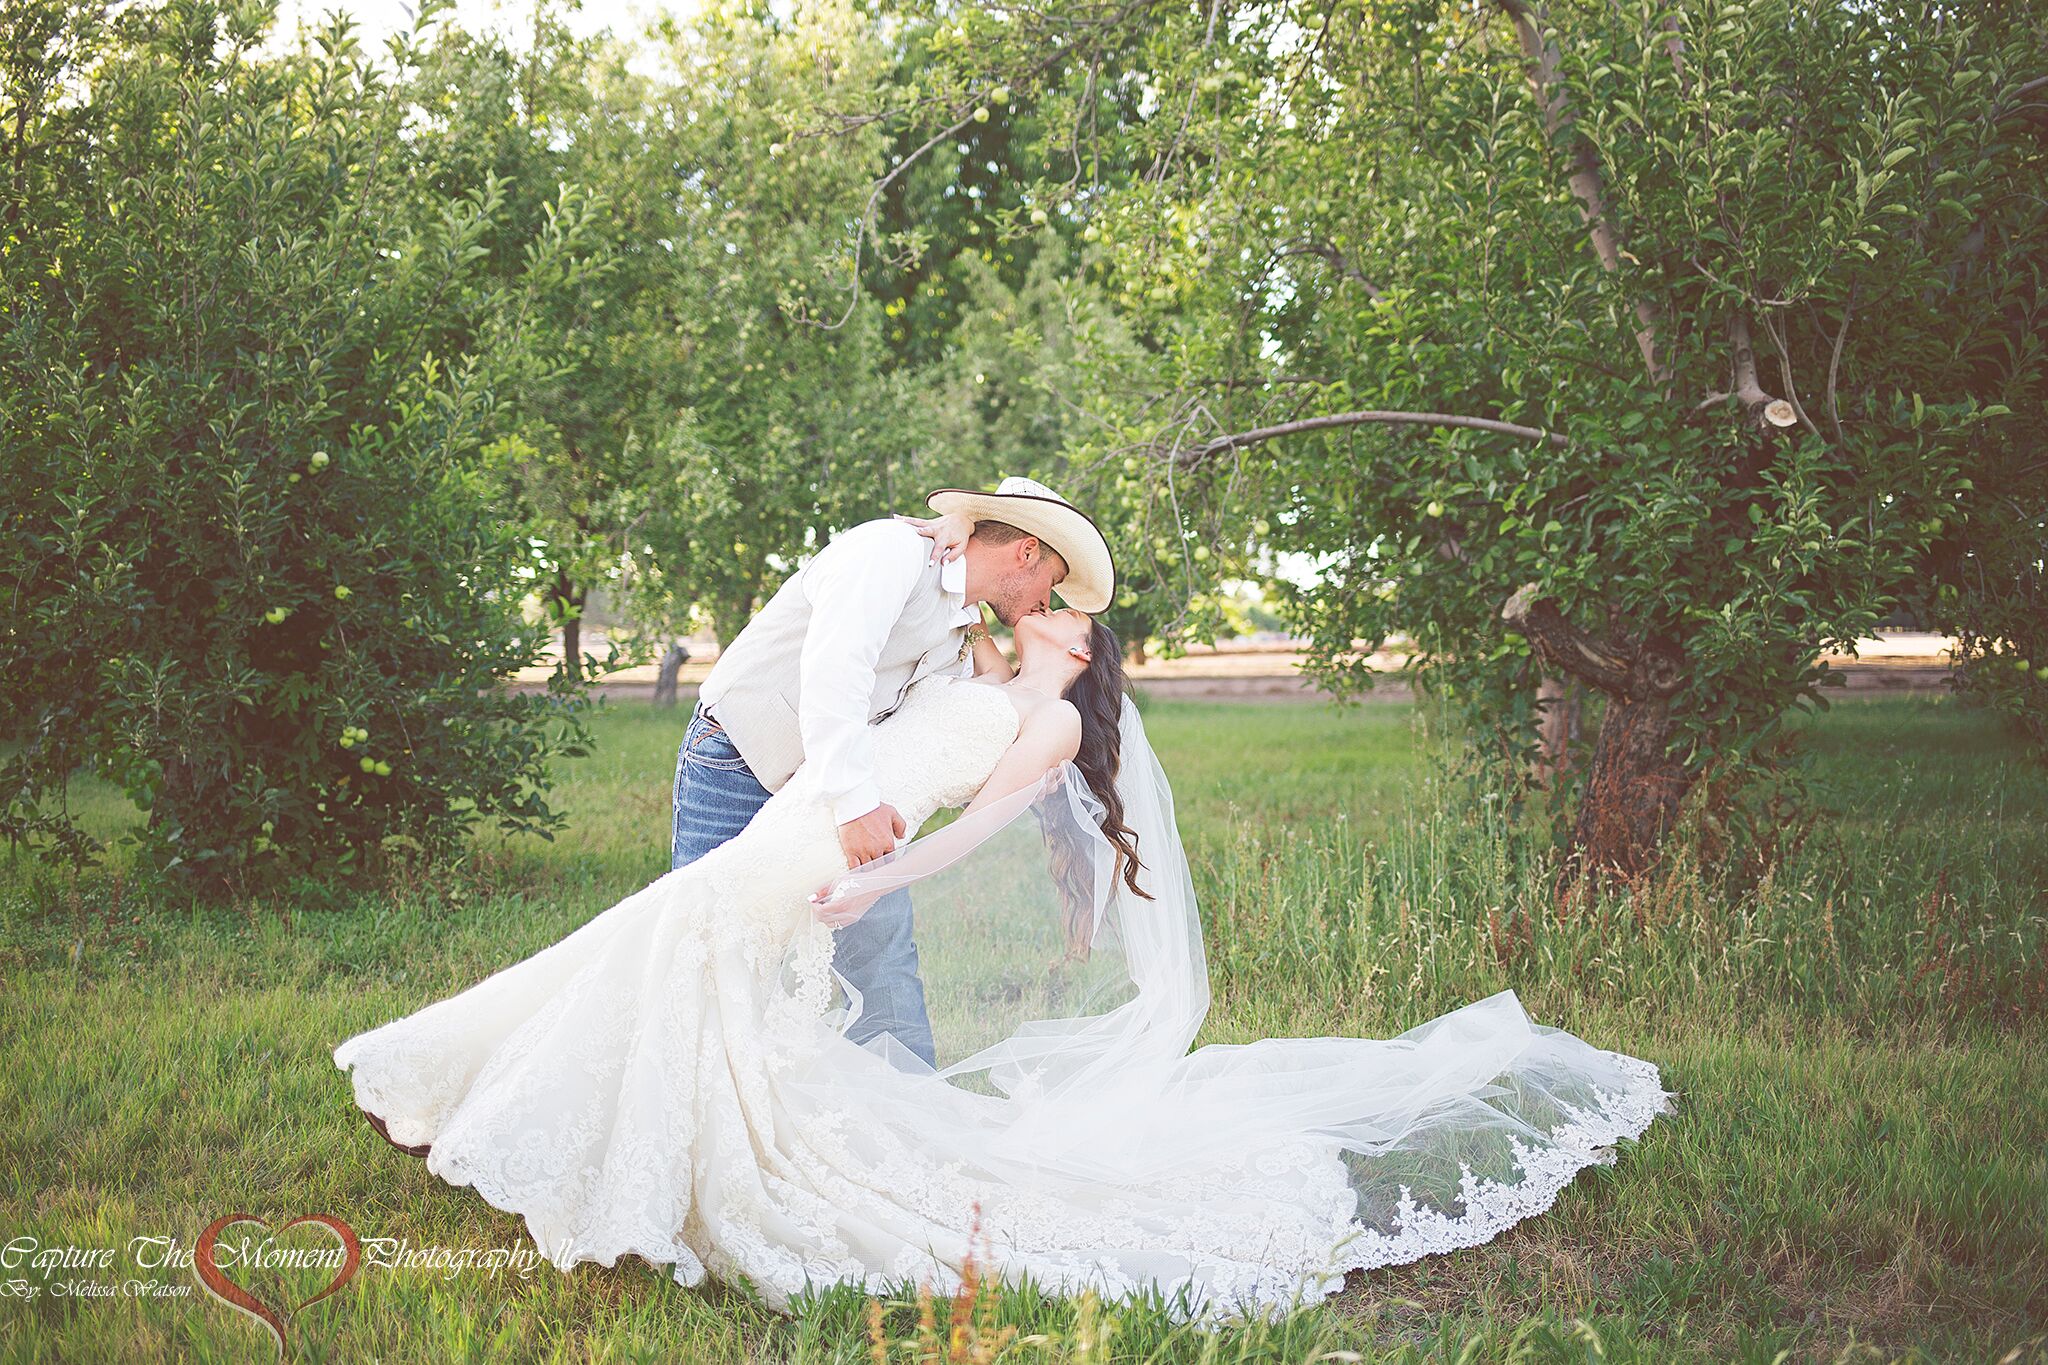 Capture the Moment Photography LLC | Wedding Photographers ...